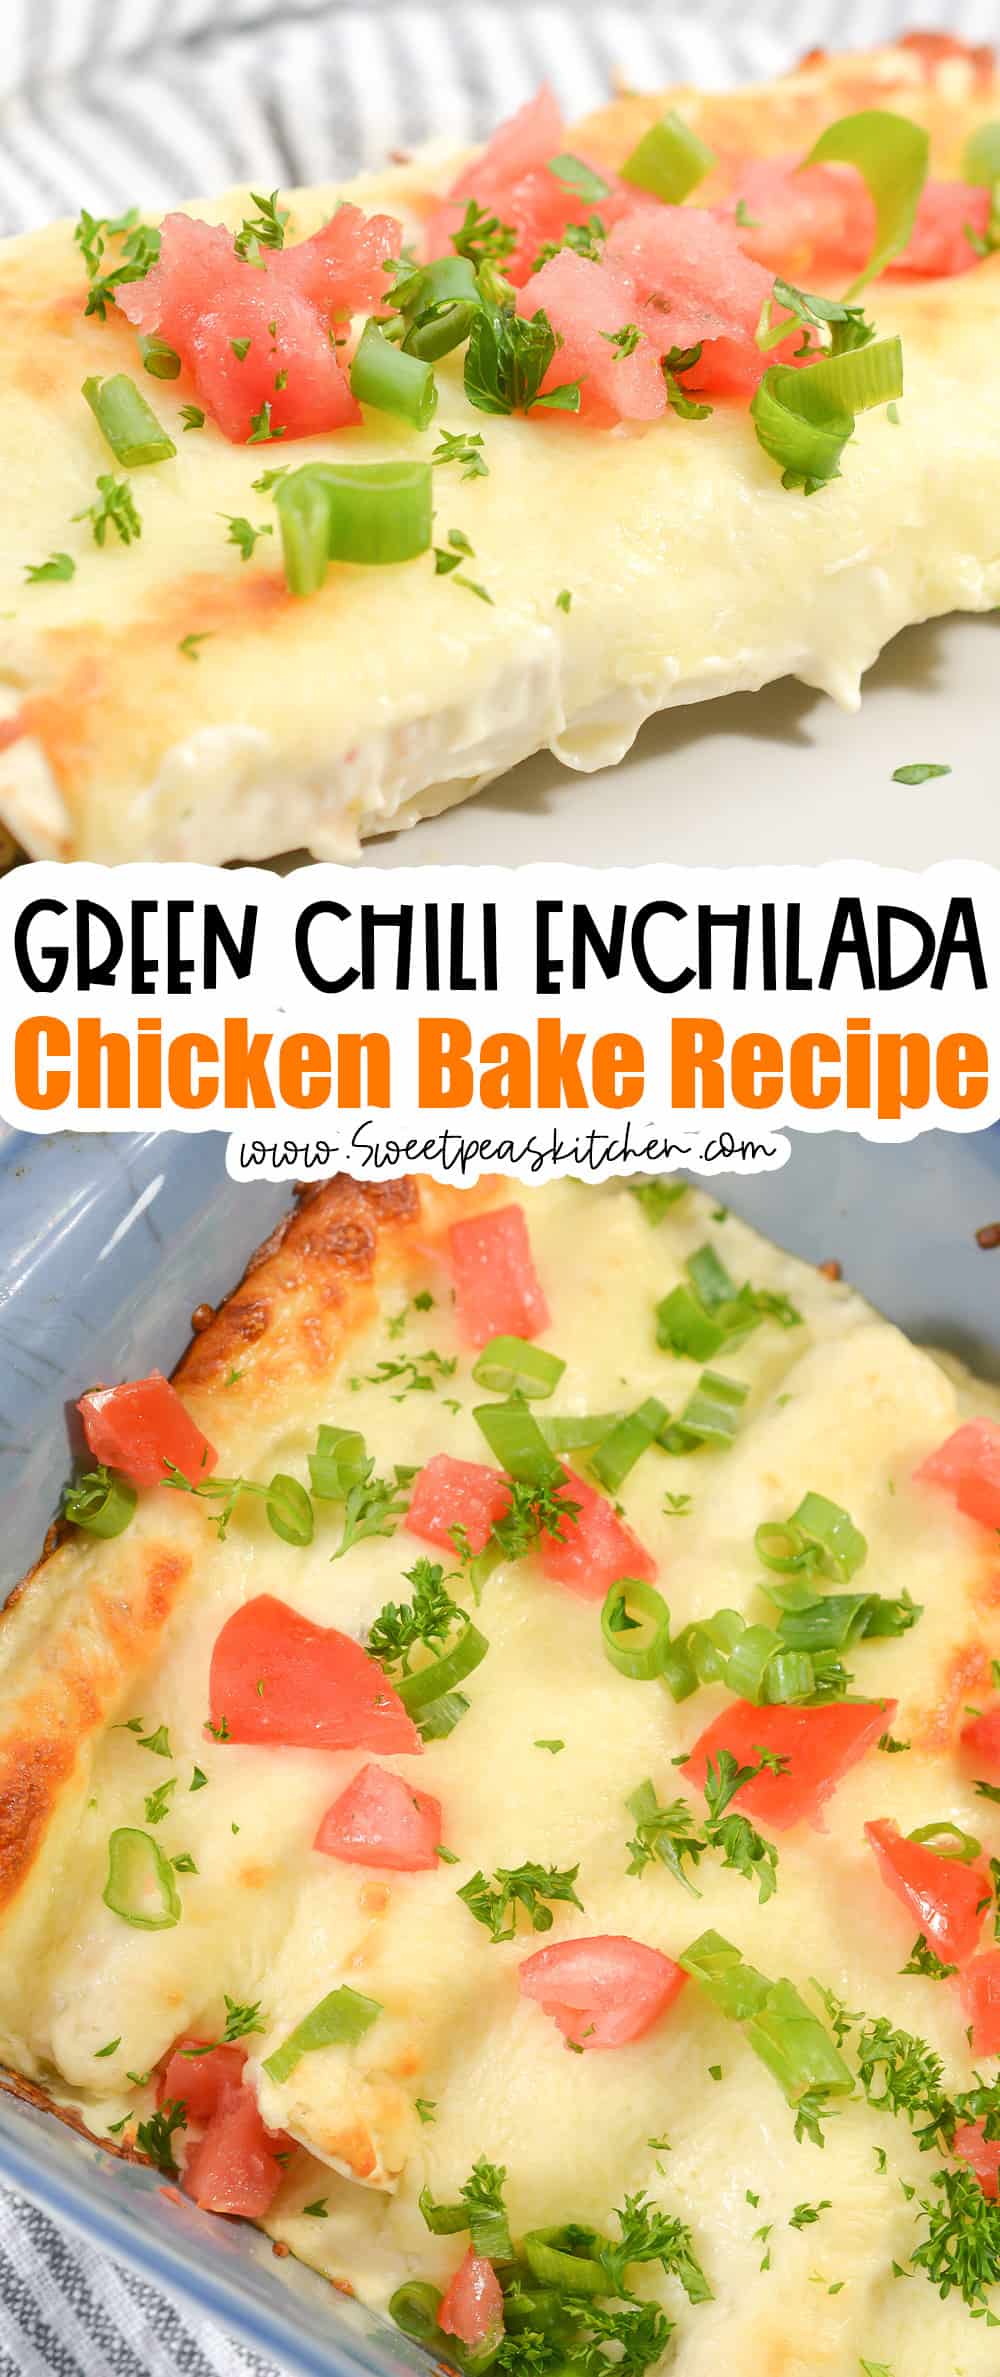 Green Chili Enchilada Chicken Bake